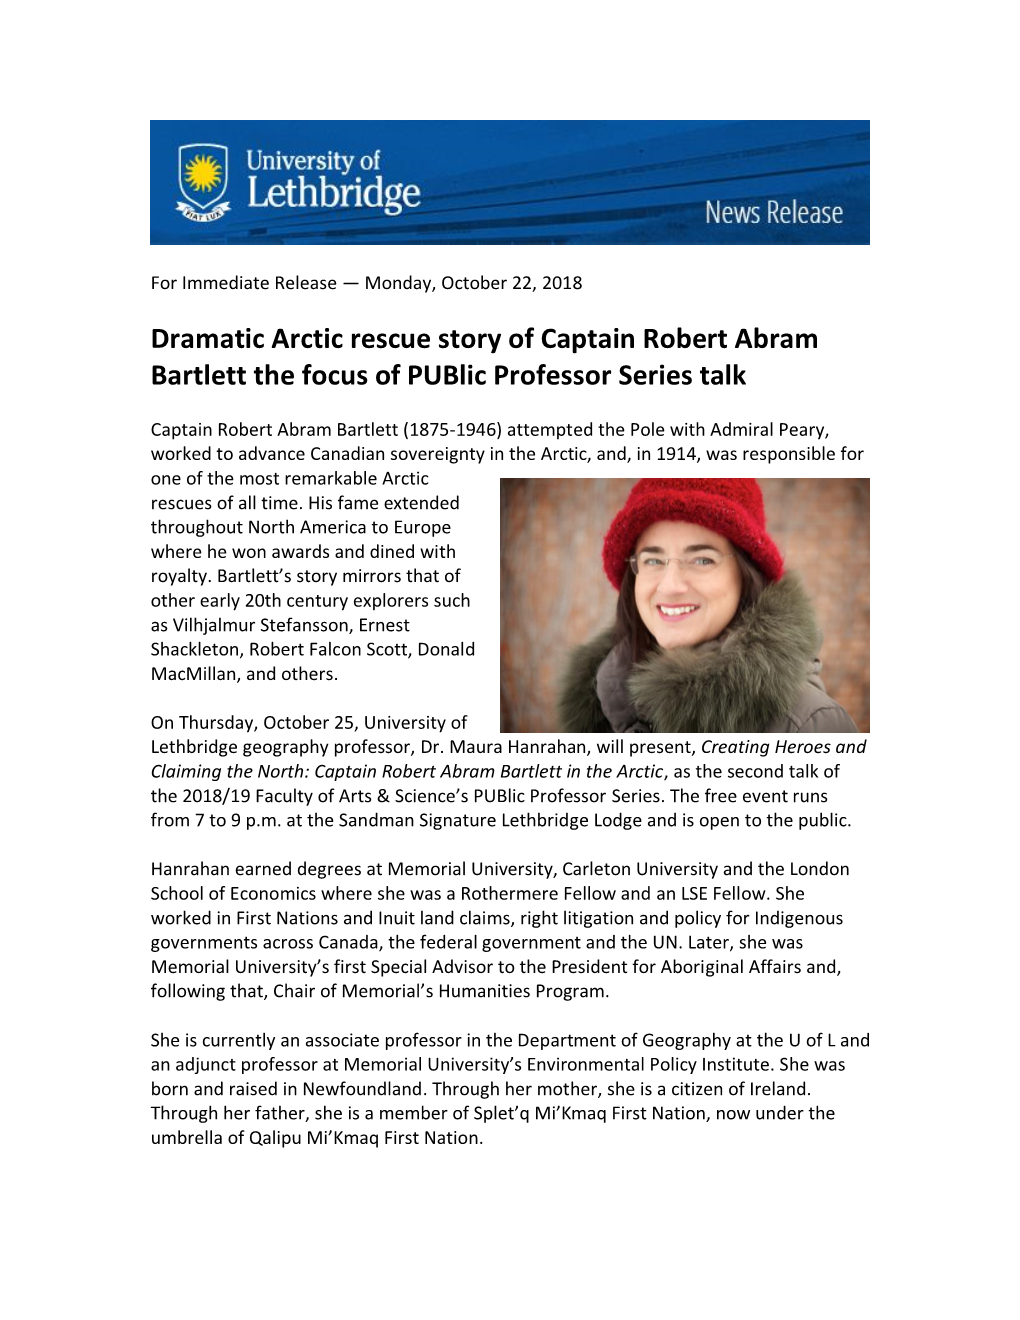 Dramatic Arctic Rescue Story of Captain Robert Abram Bartlett the Focus of Public Professor Series Talk